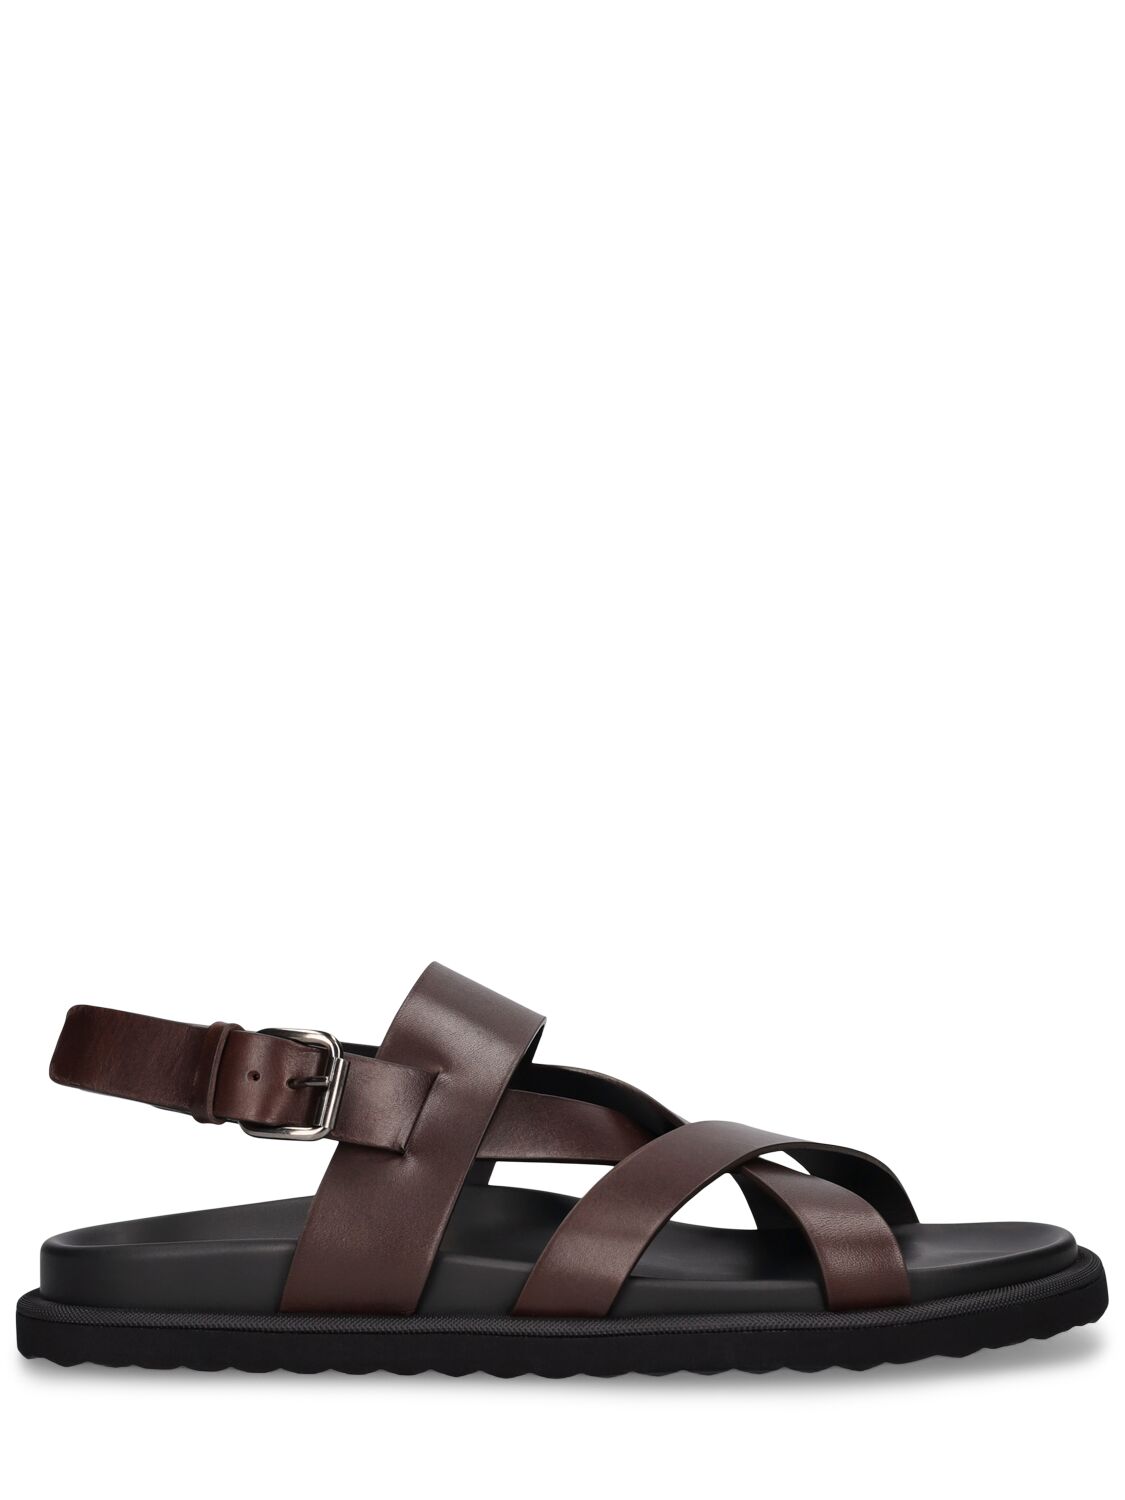 Image of Charrat Leather Sandals